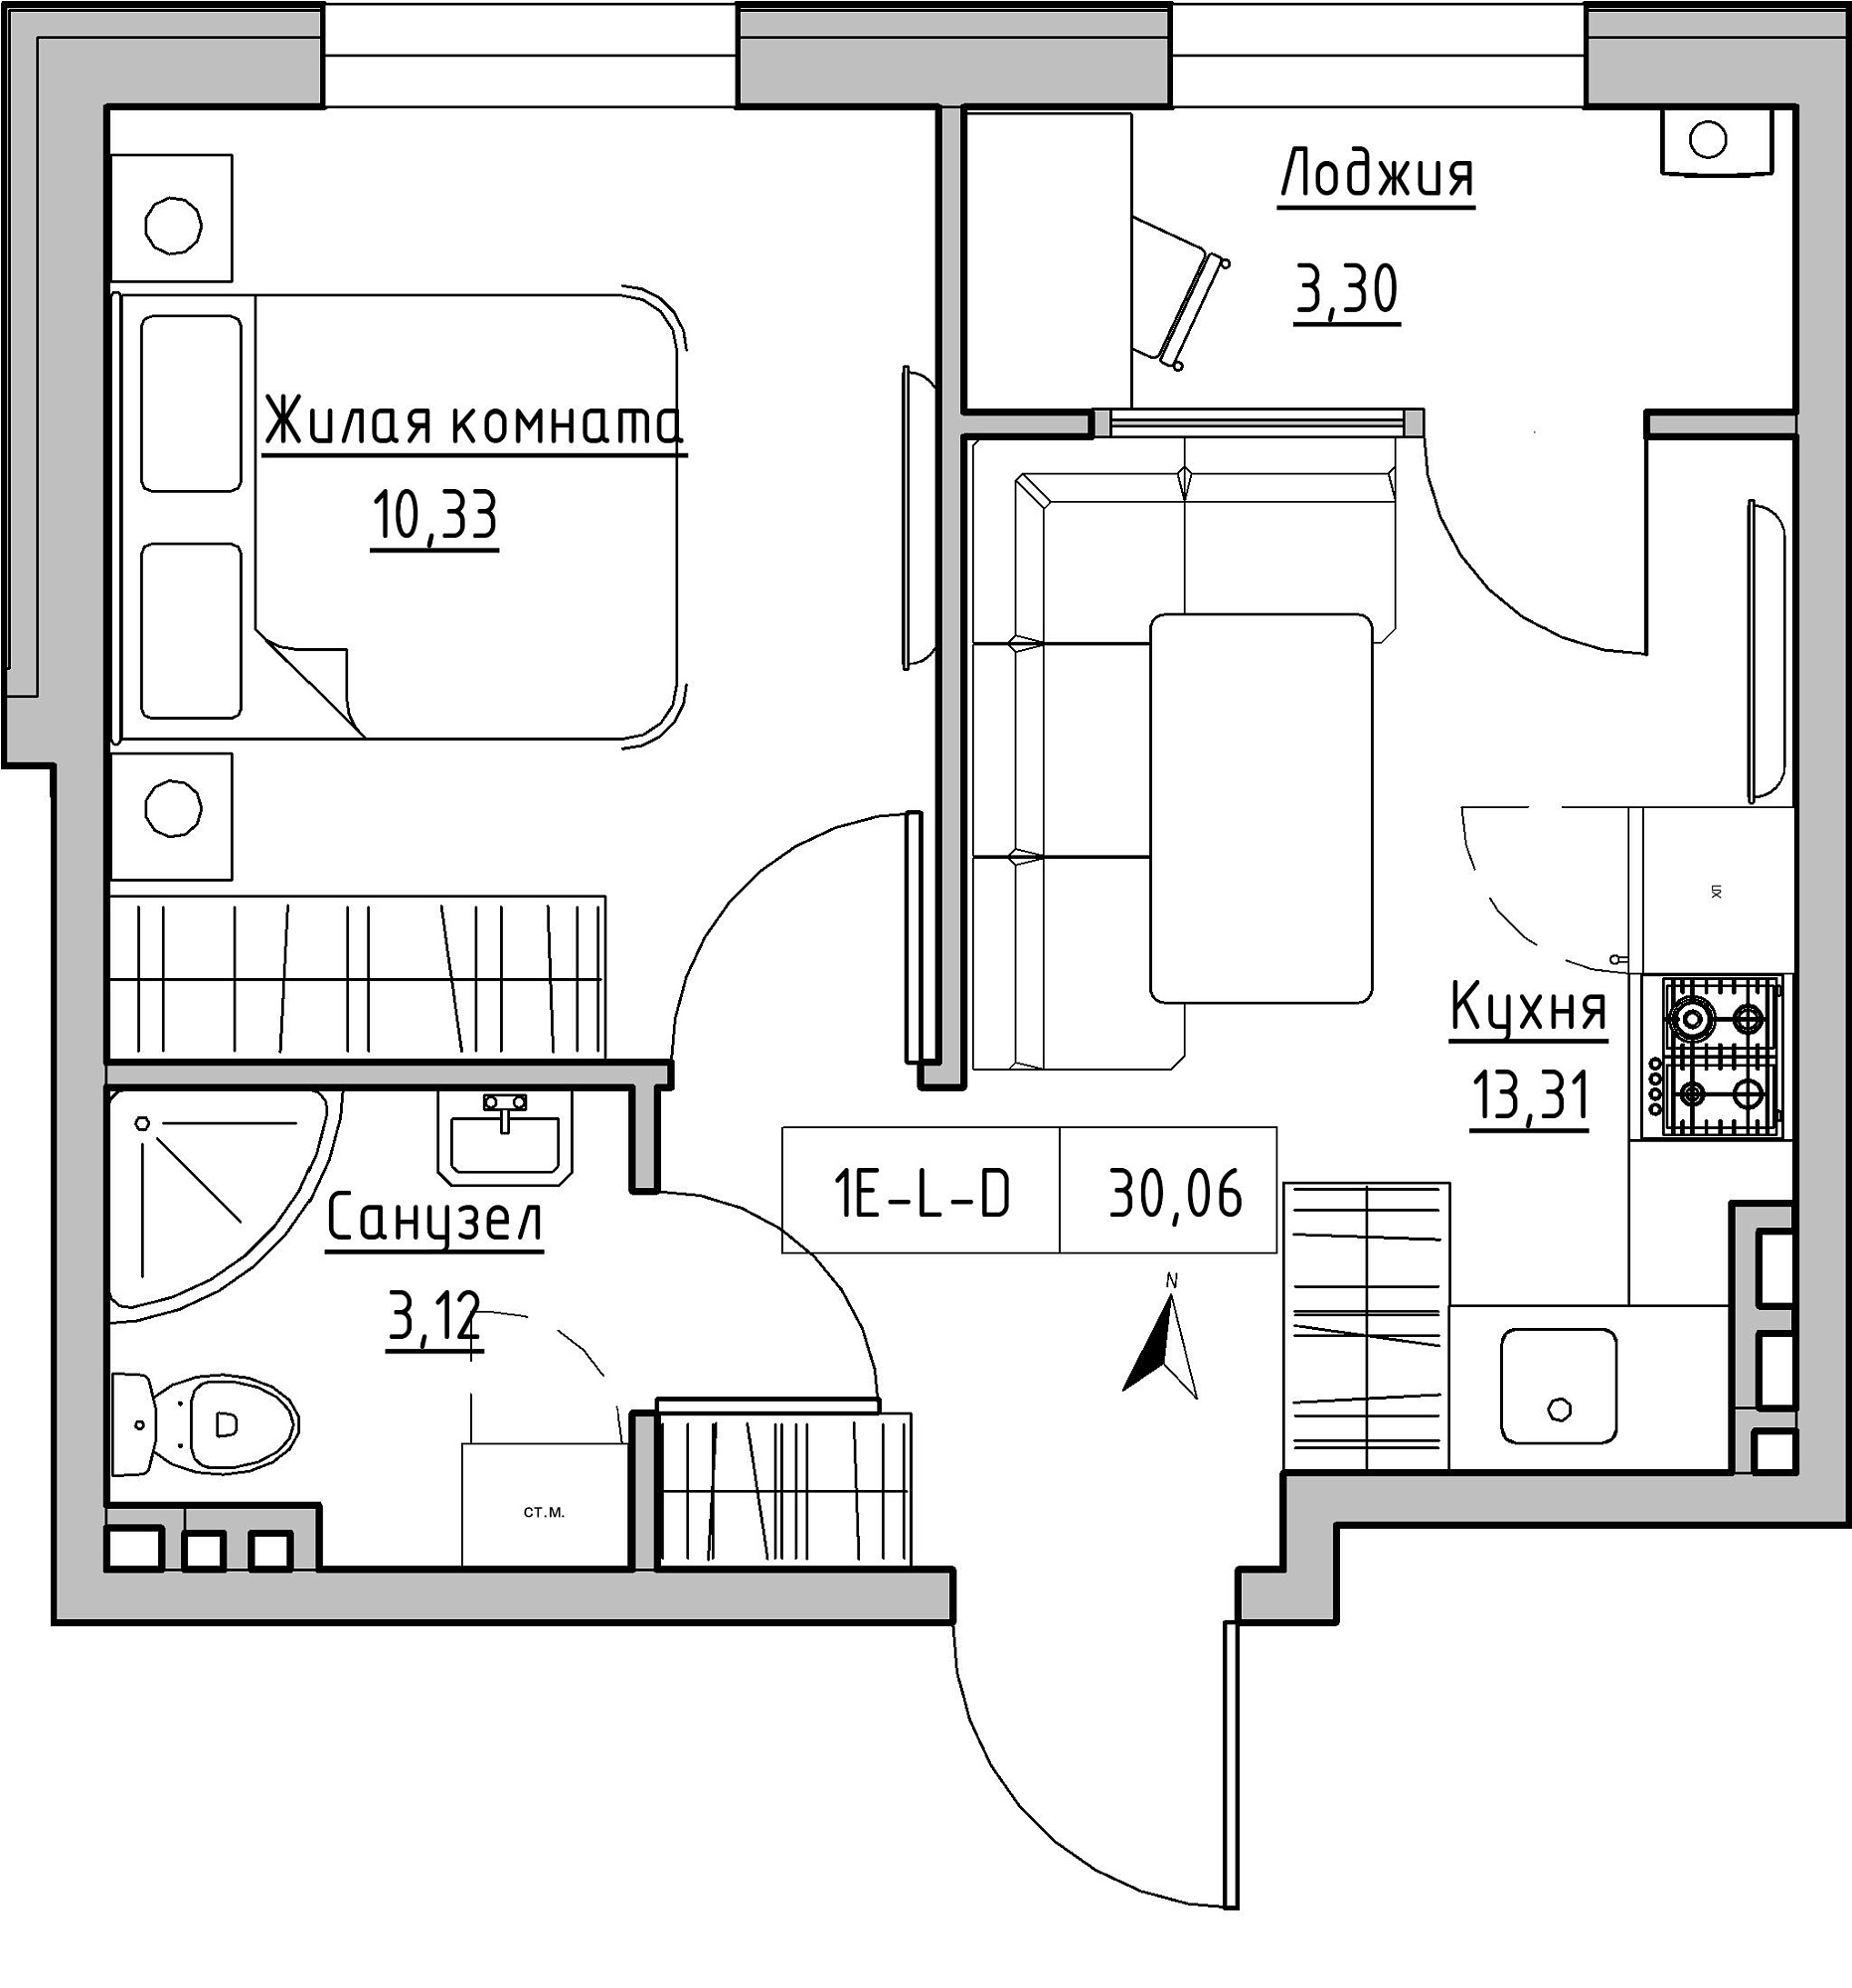 Planning 1-rm flats area 30.06m2, KS-024-02/0001.